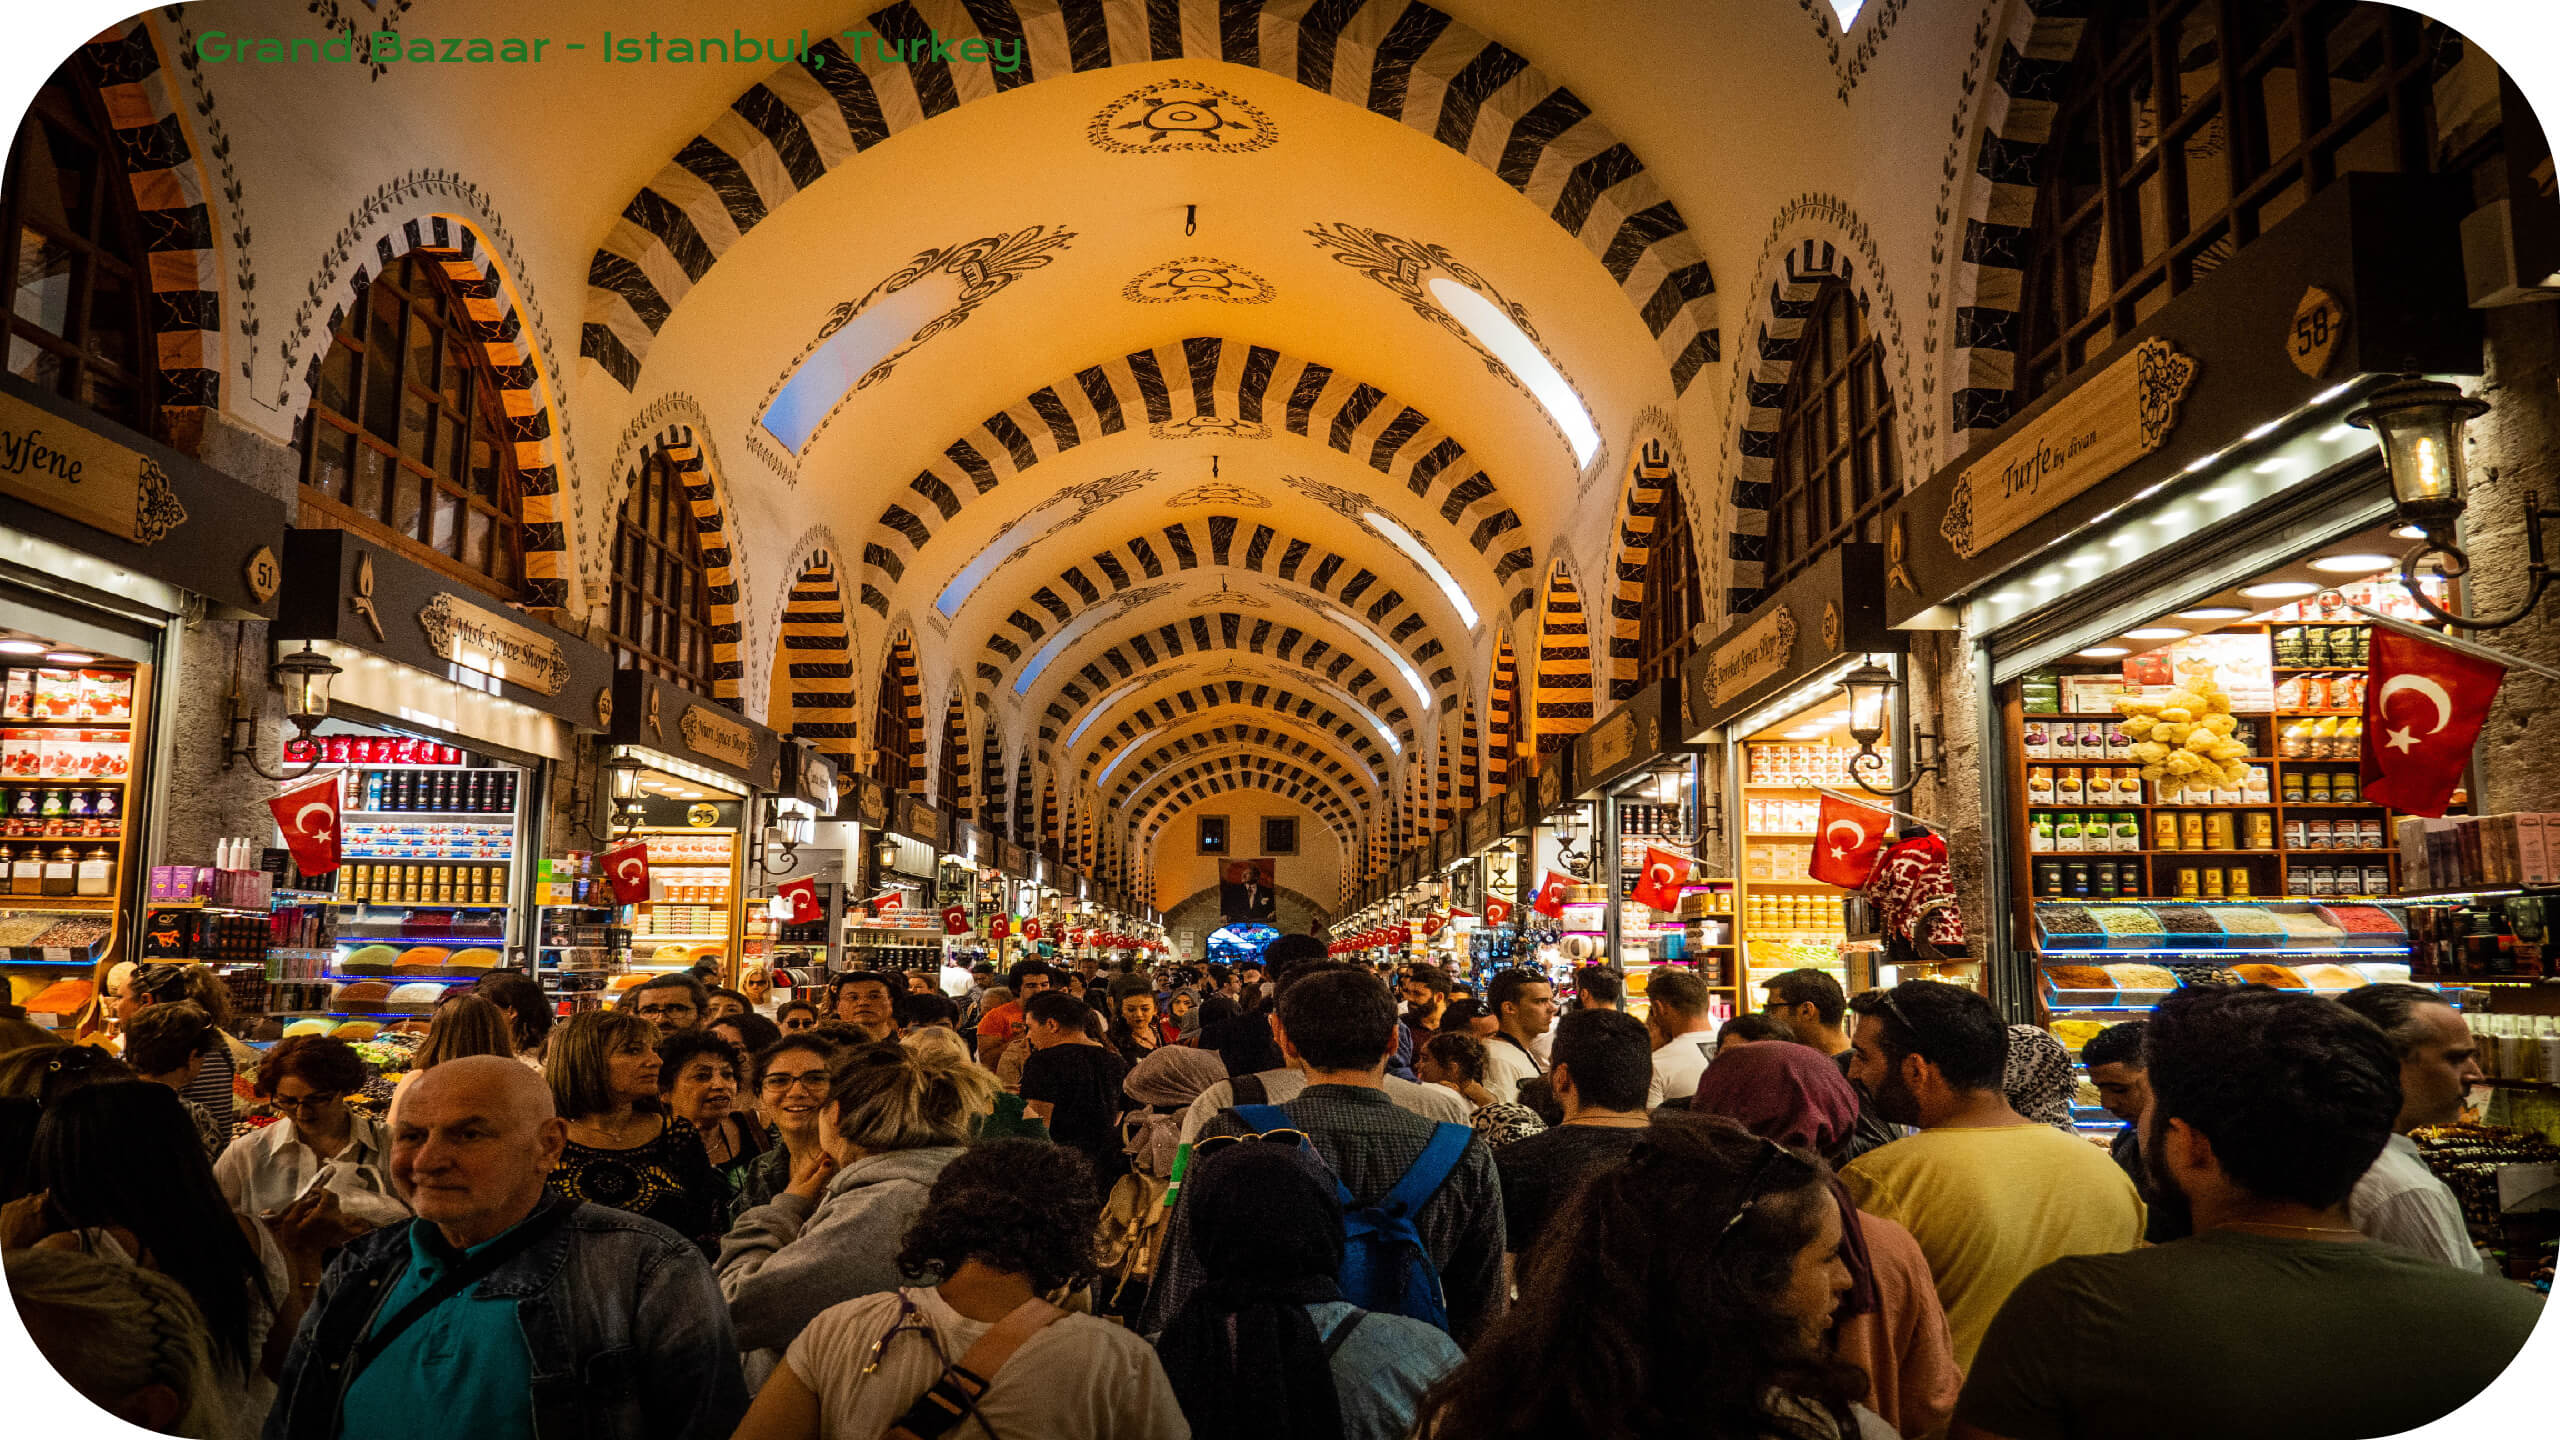 Grand Bazaar - Istanbul, Turkey